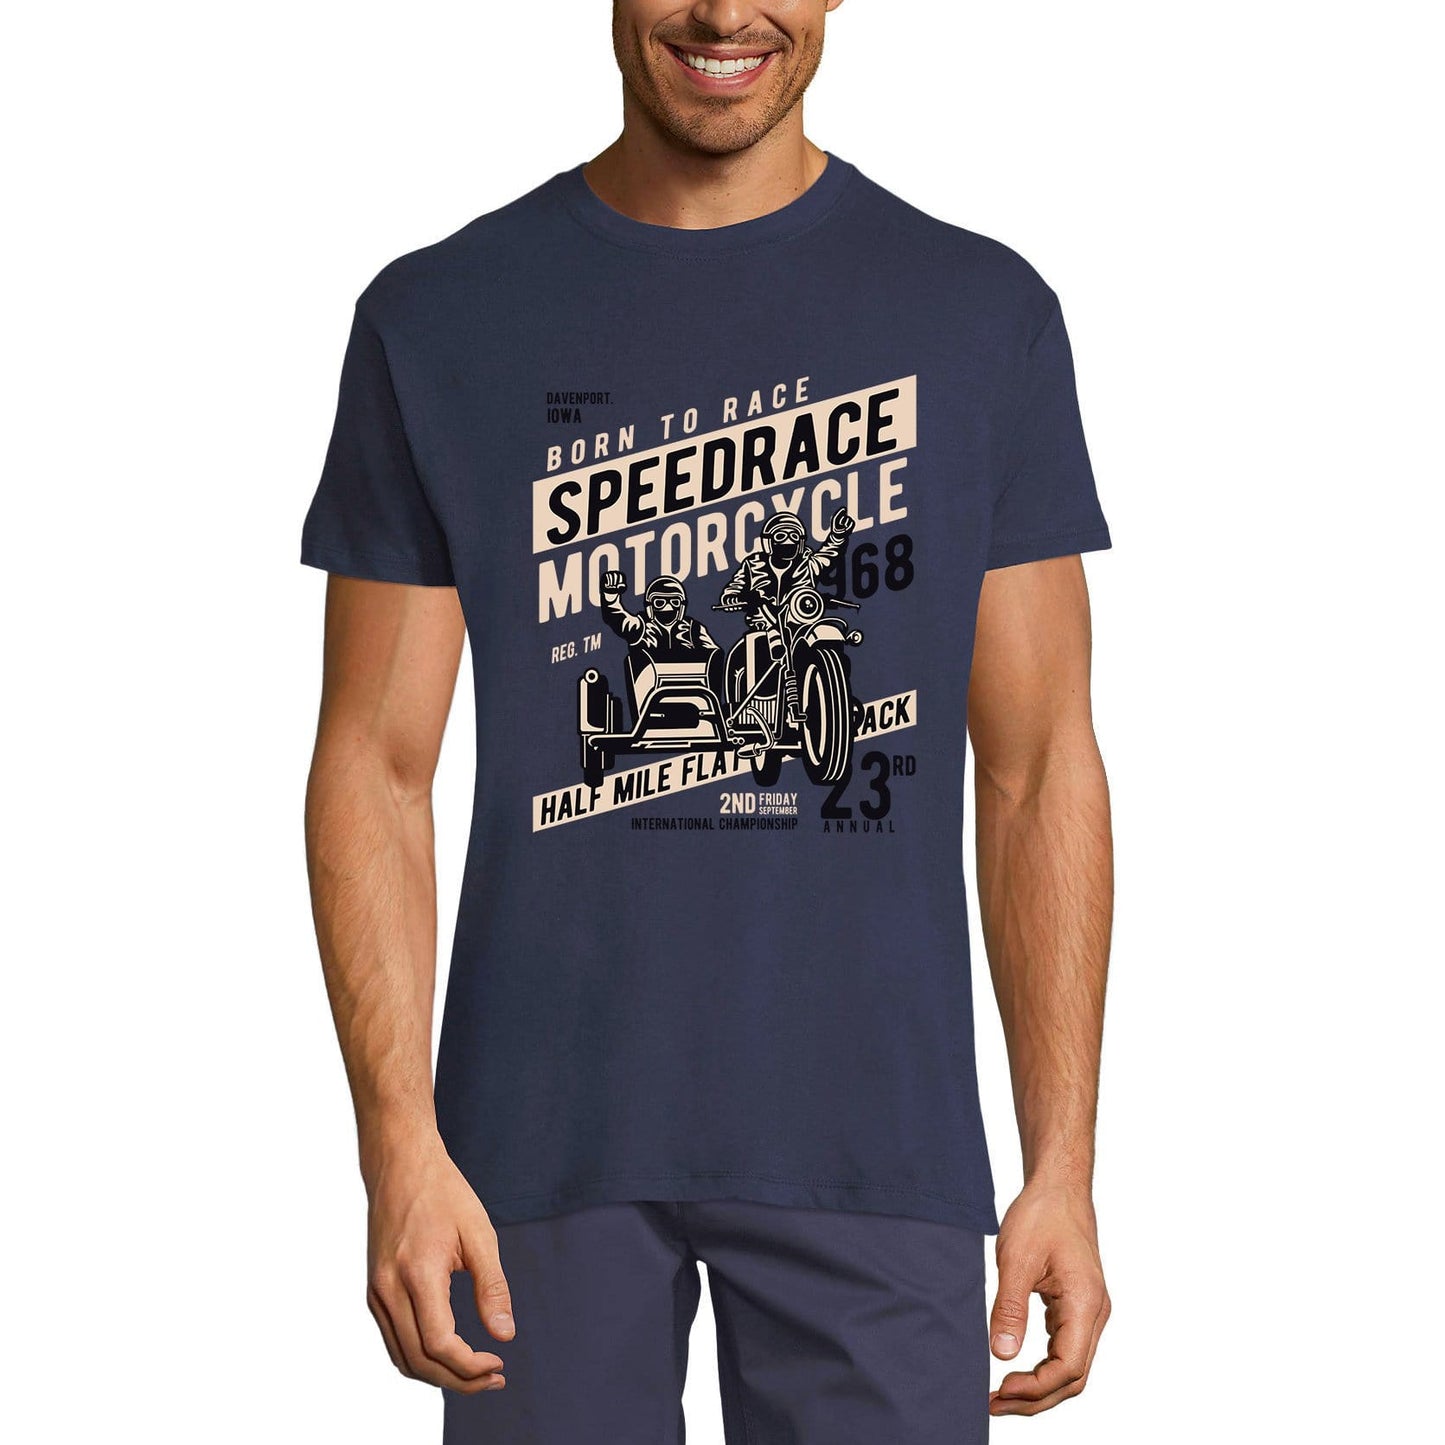 ULTRABASIC Men's Graphic T-Shirt Born To Race - Speedrace Motorcycle 1968